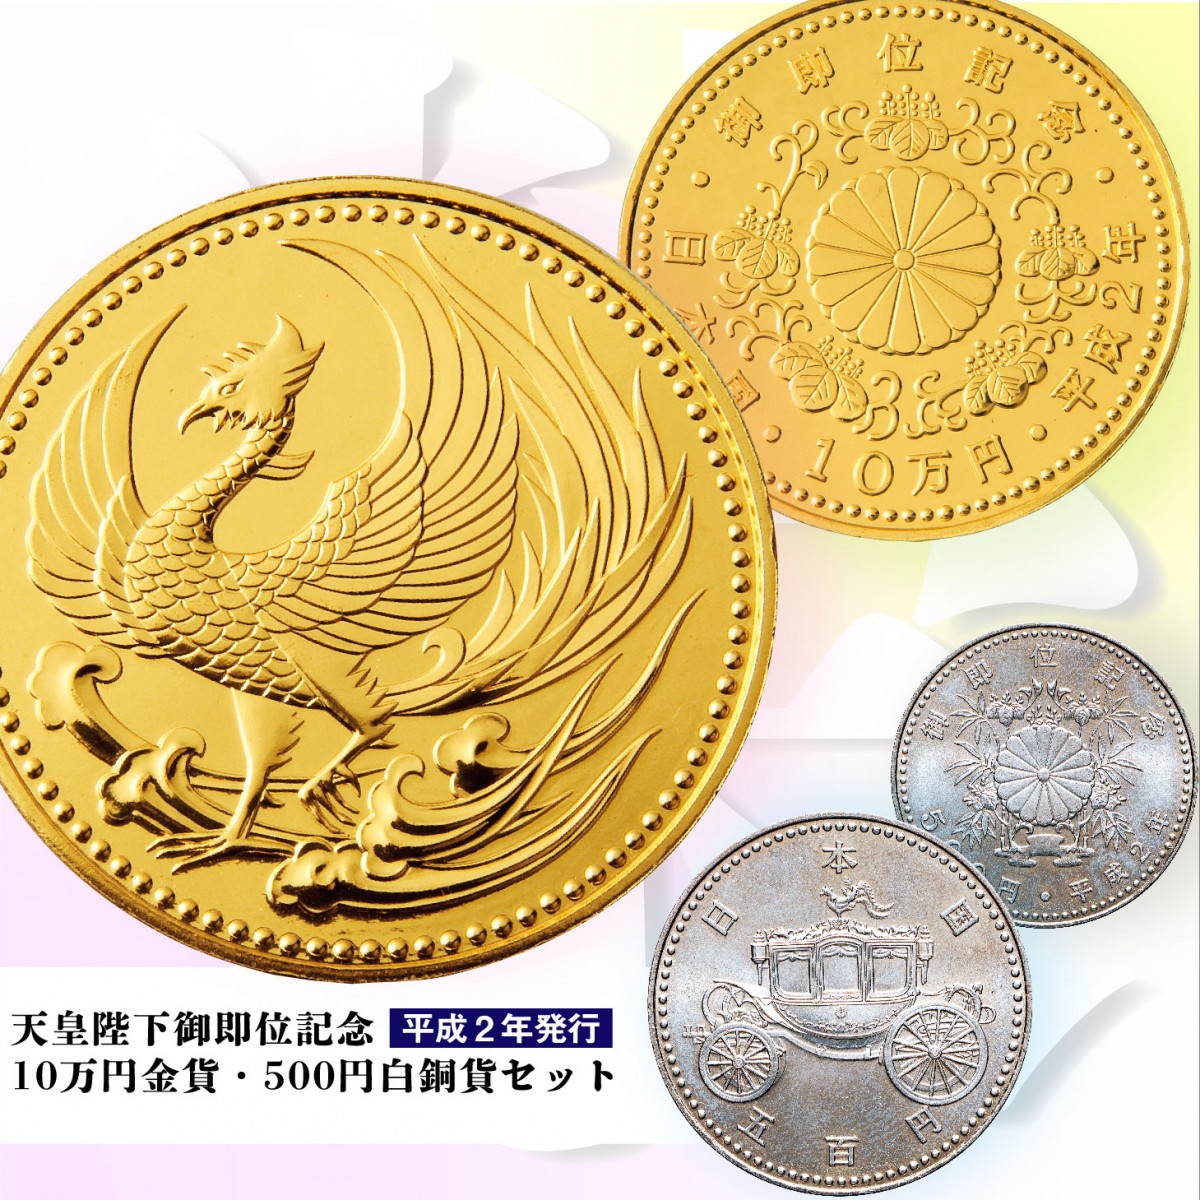 NEW定番天皇陛下御即位記念硬貨 500円 50枚 1ロール 貨幣